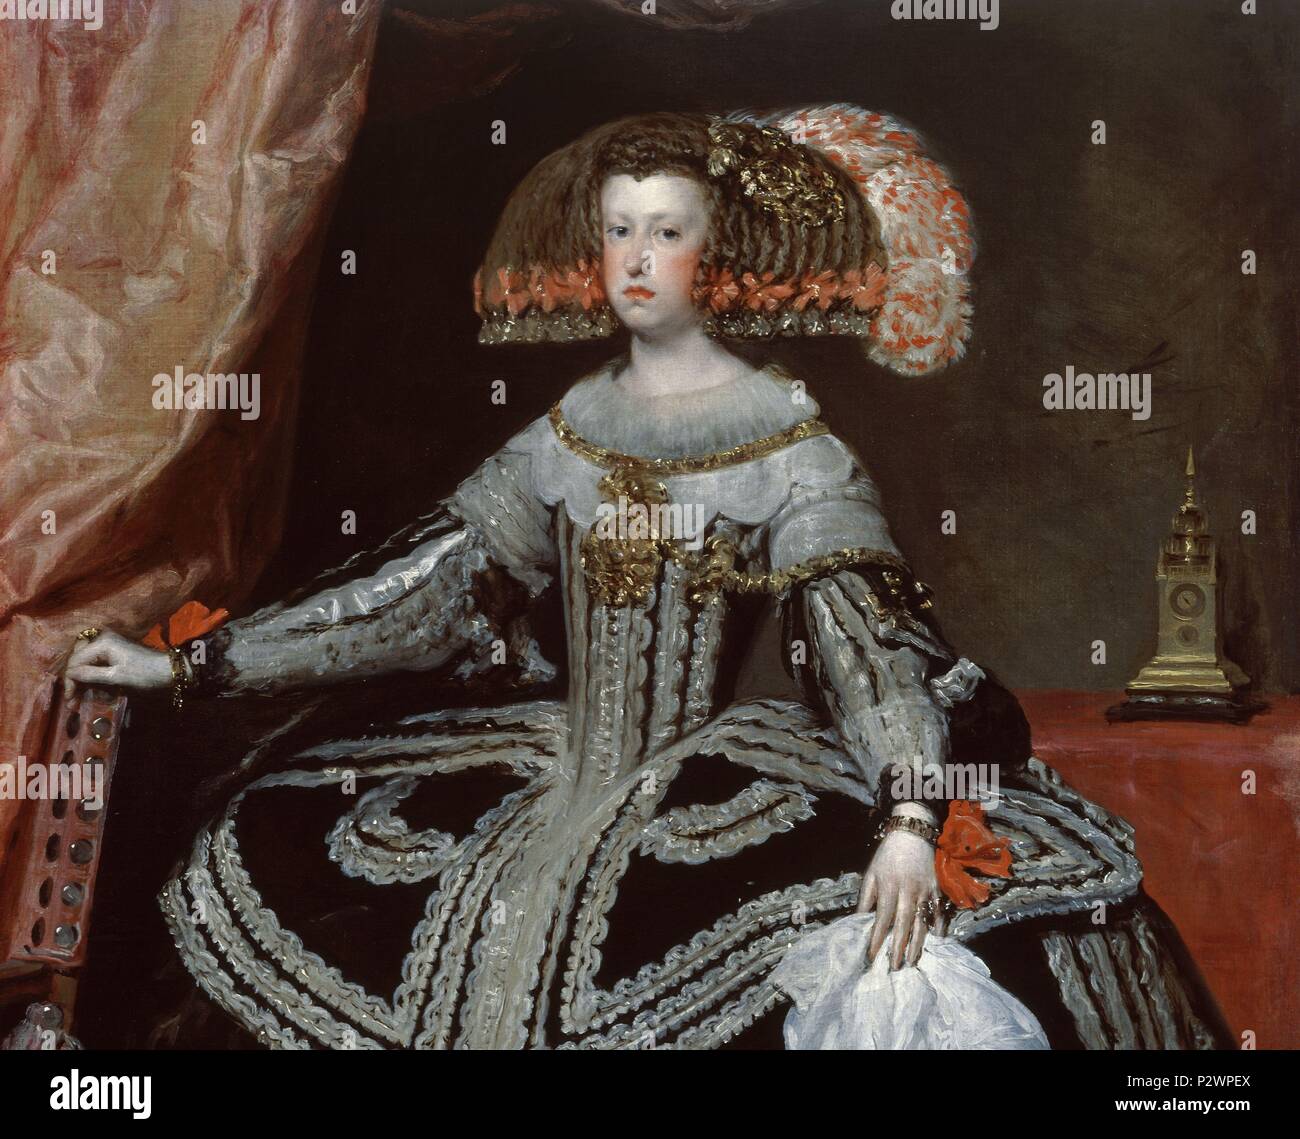 'Mariana of Austria. Queen of Spain (detail)', ca. 1652, Oil on canvas, P01191. Author: Diego Velázquez (1599-1660). Location: MUSEO DEL PRADO-PINTURA, MADRID, SPAIN. Stock Photo